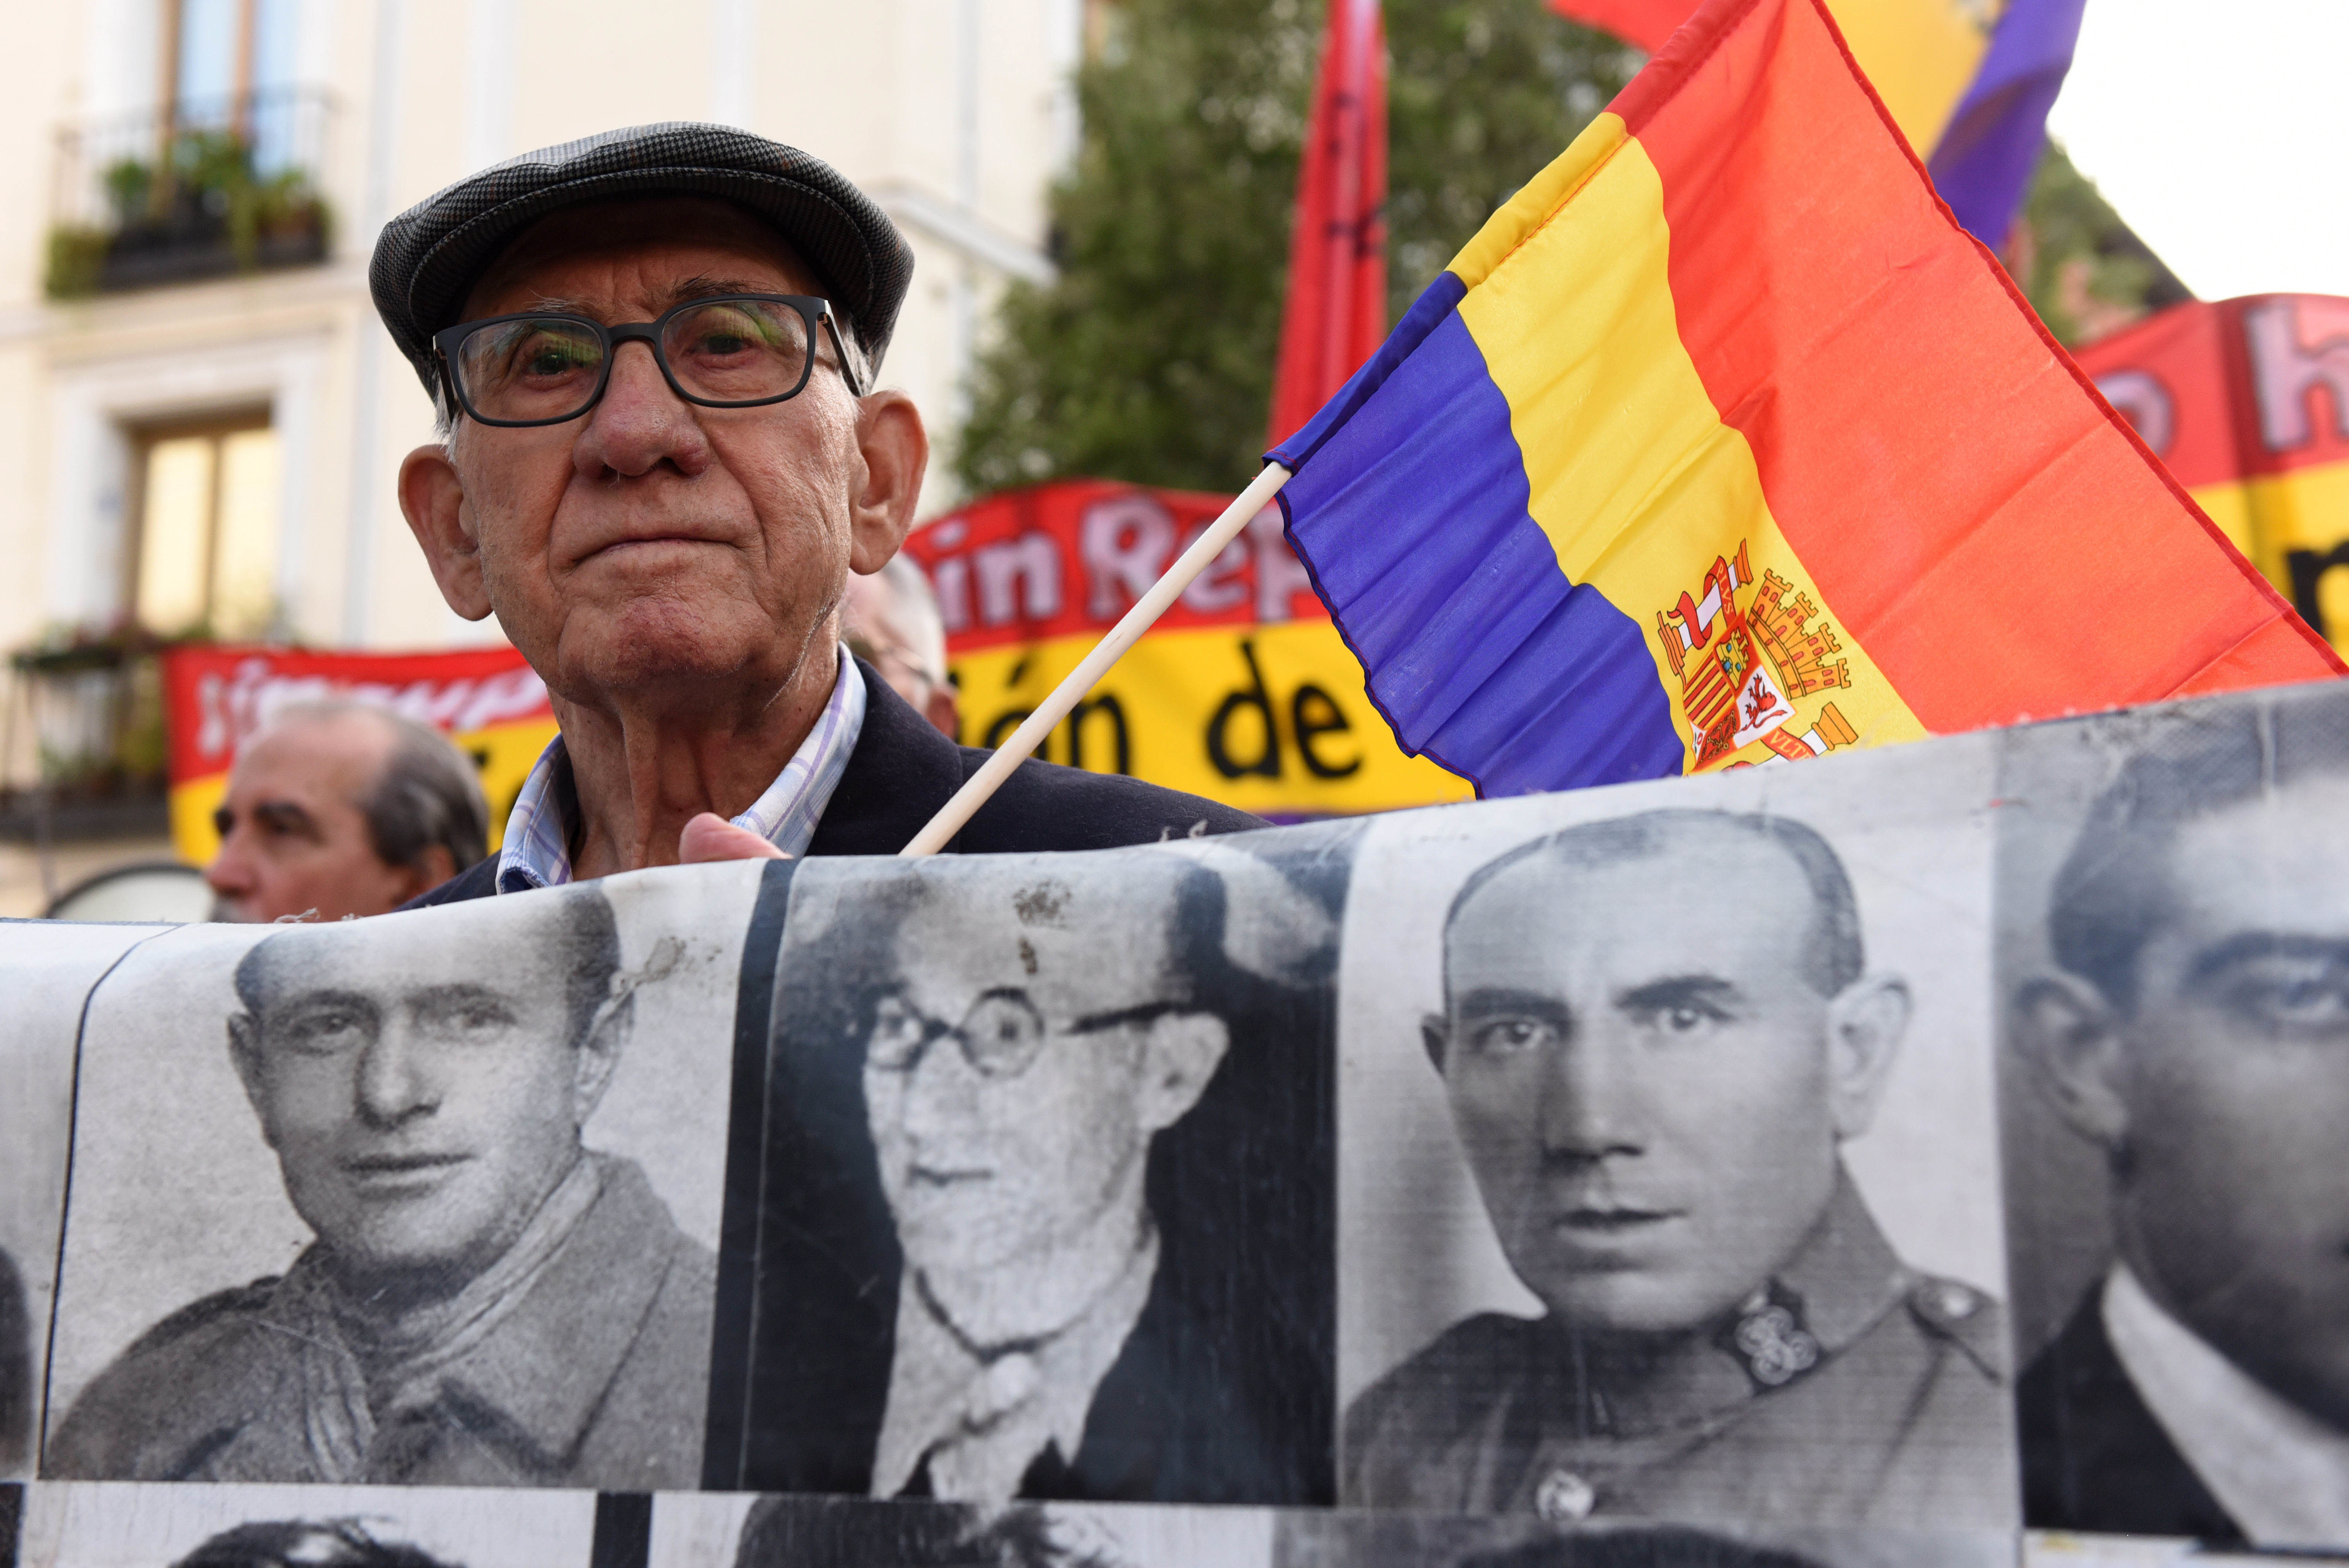 Nuncio accuses Spain of 'resurrecting Franco', leading to complaint